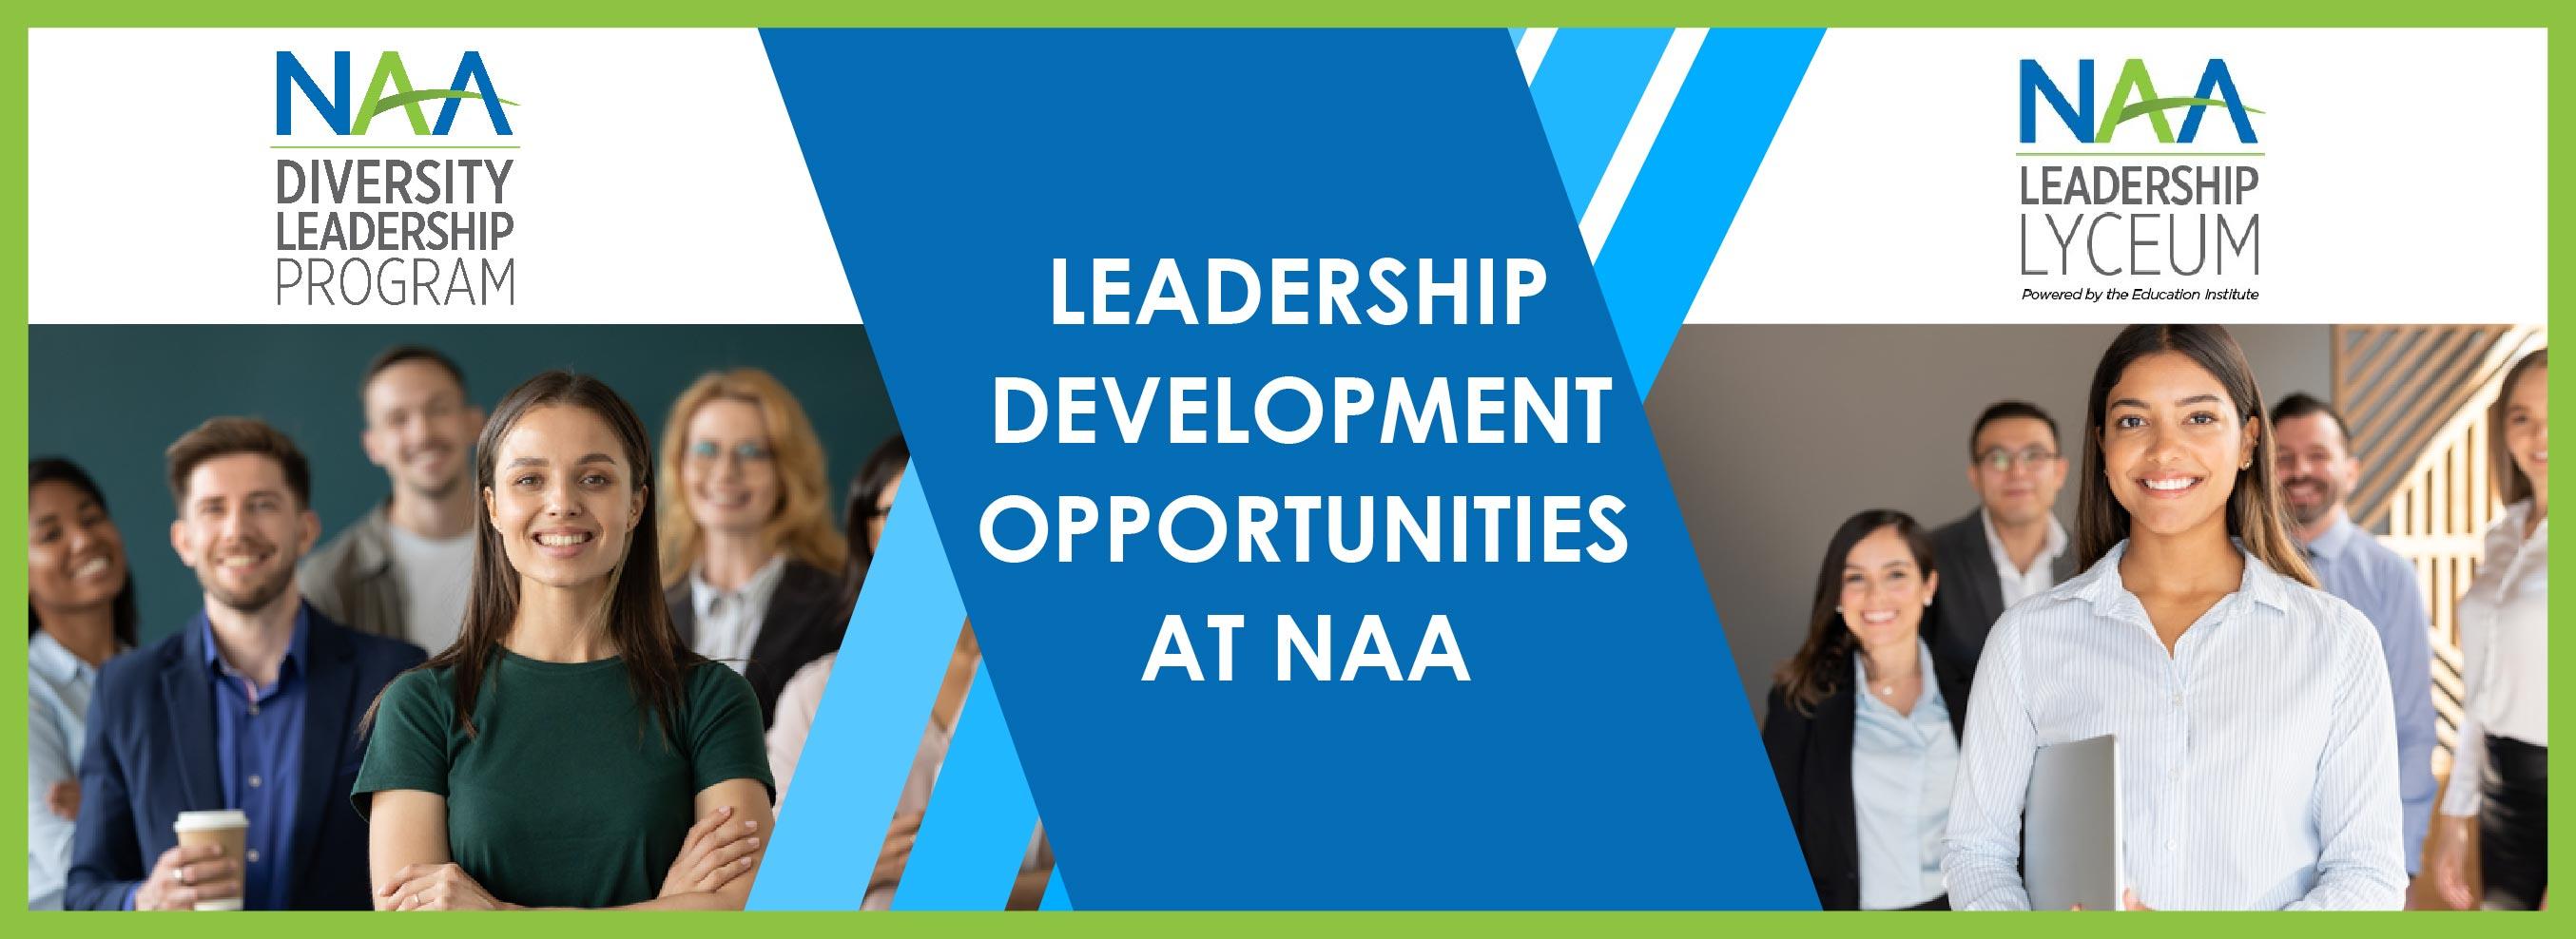 leadership development opportunities at NAA